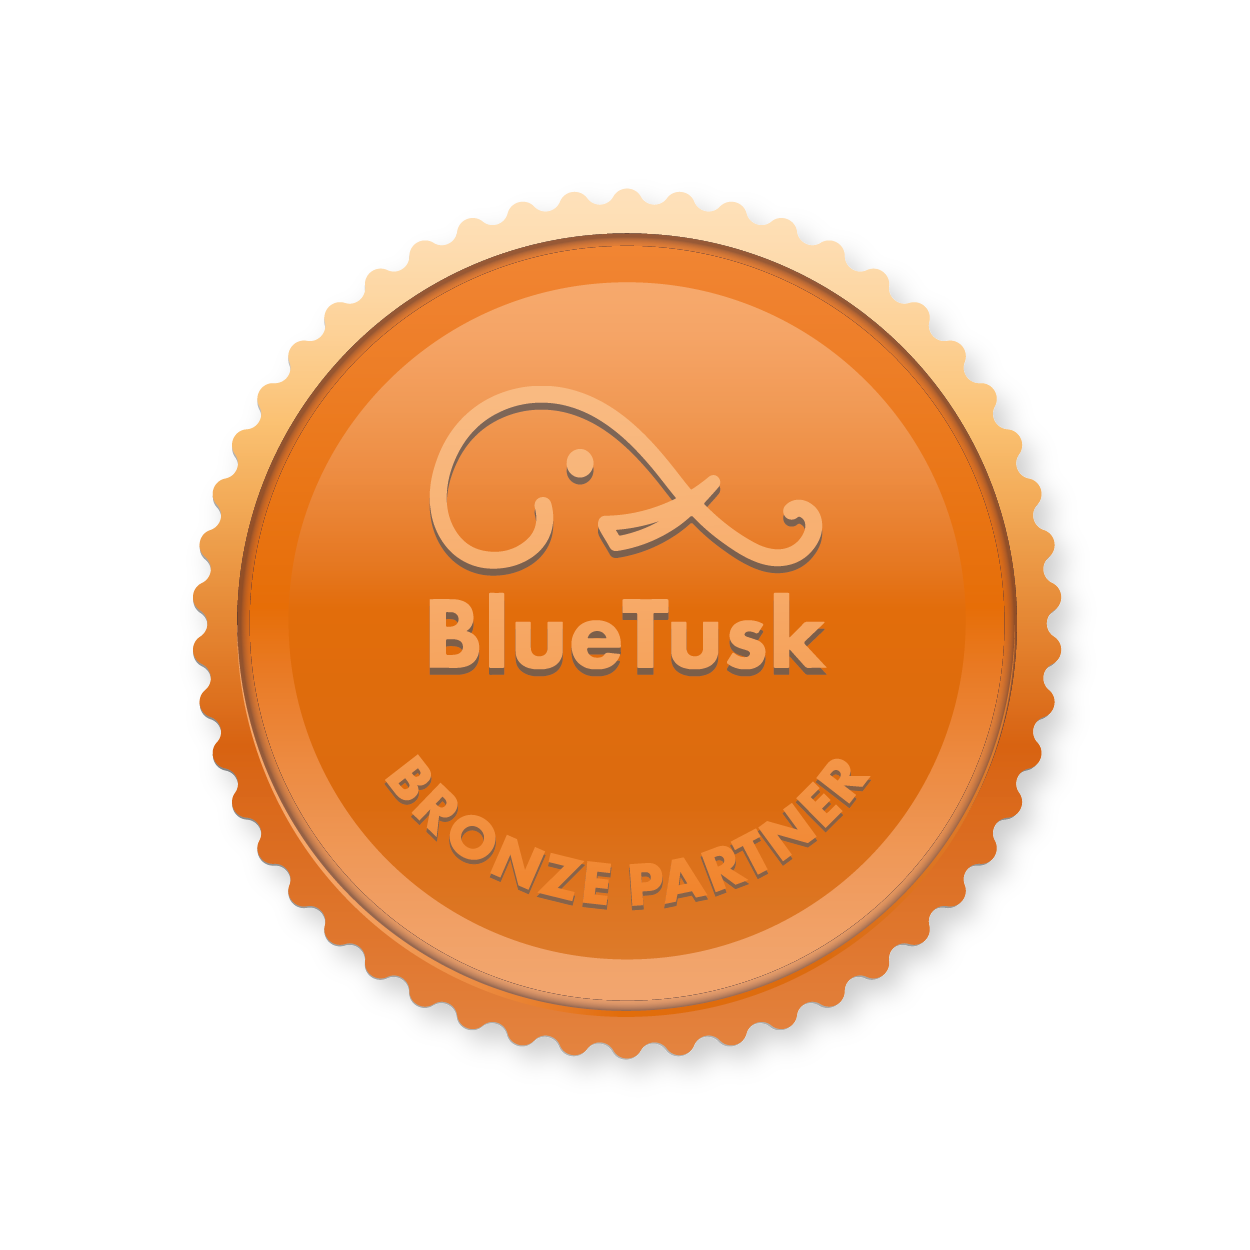 BlueTusk Bronze Partner Package